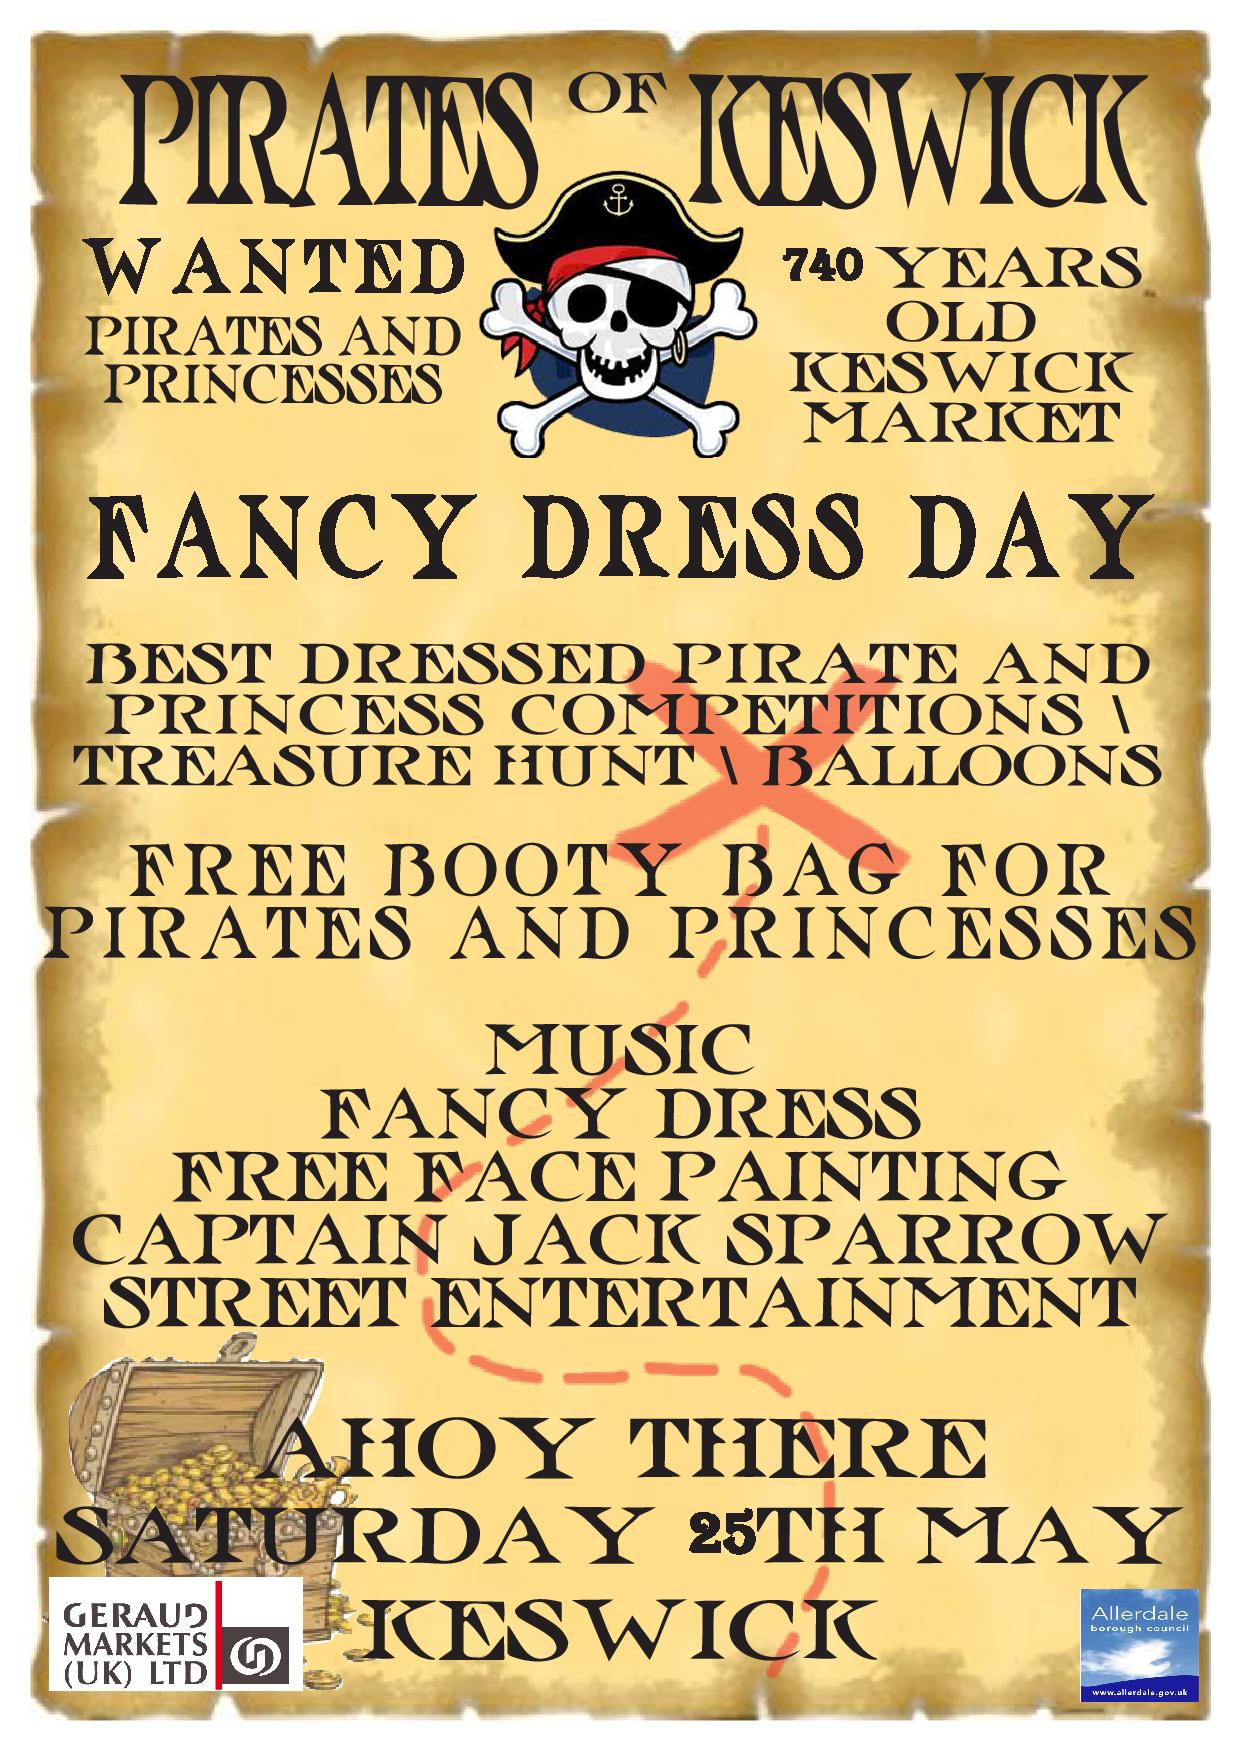 Pirates of Keswick Fancy Dress Day at Keswick Market